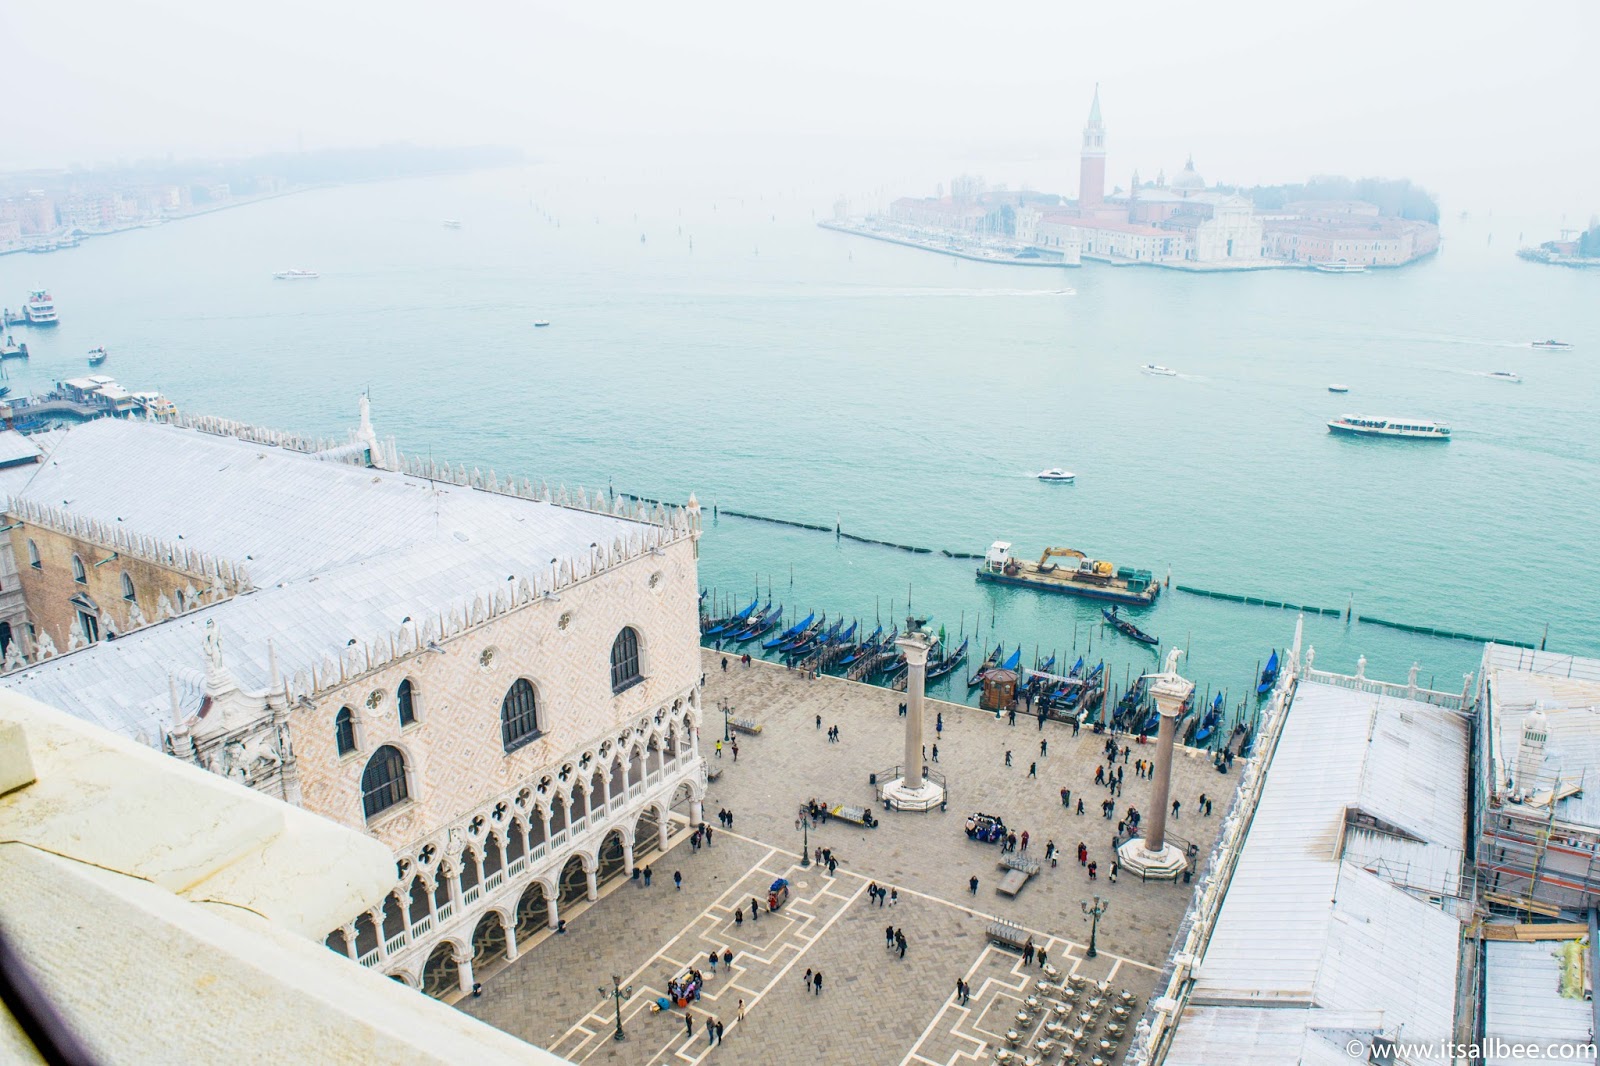 Venice In November | The Best Venice Photography Spots